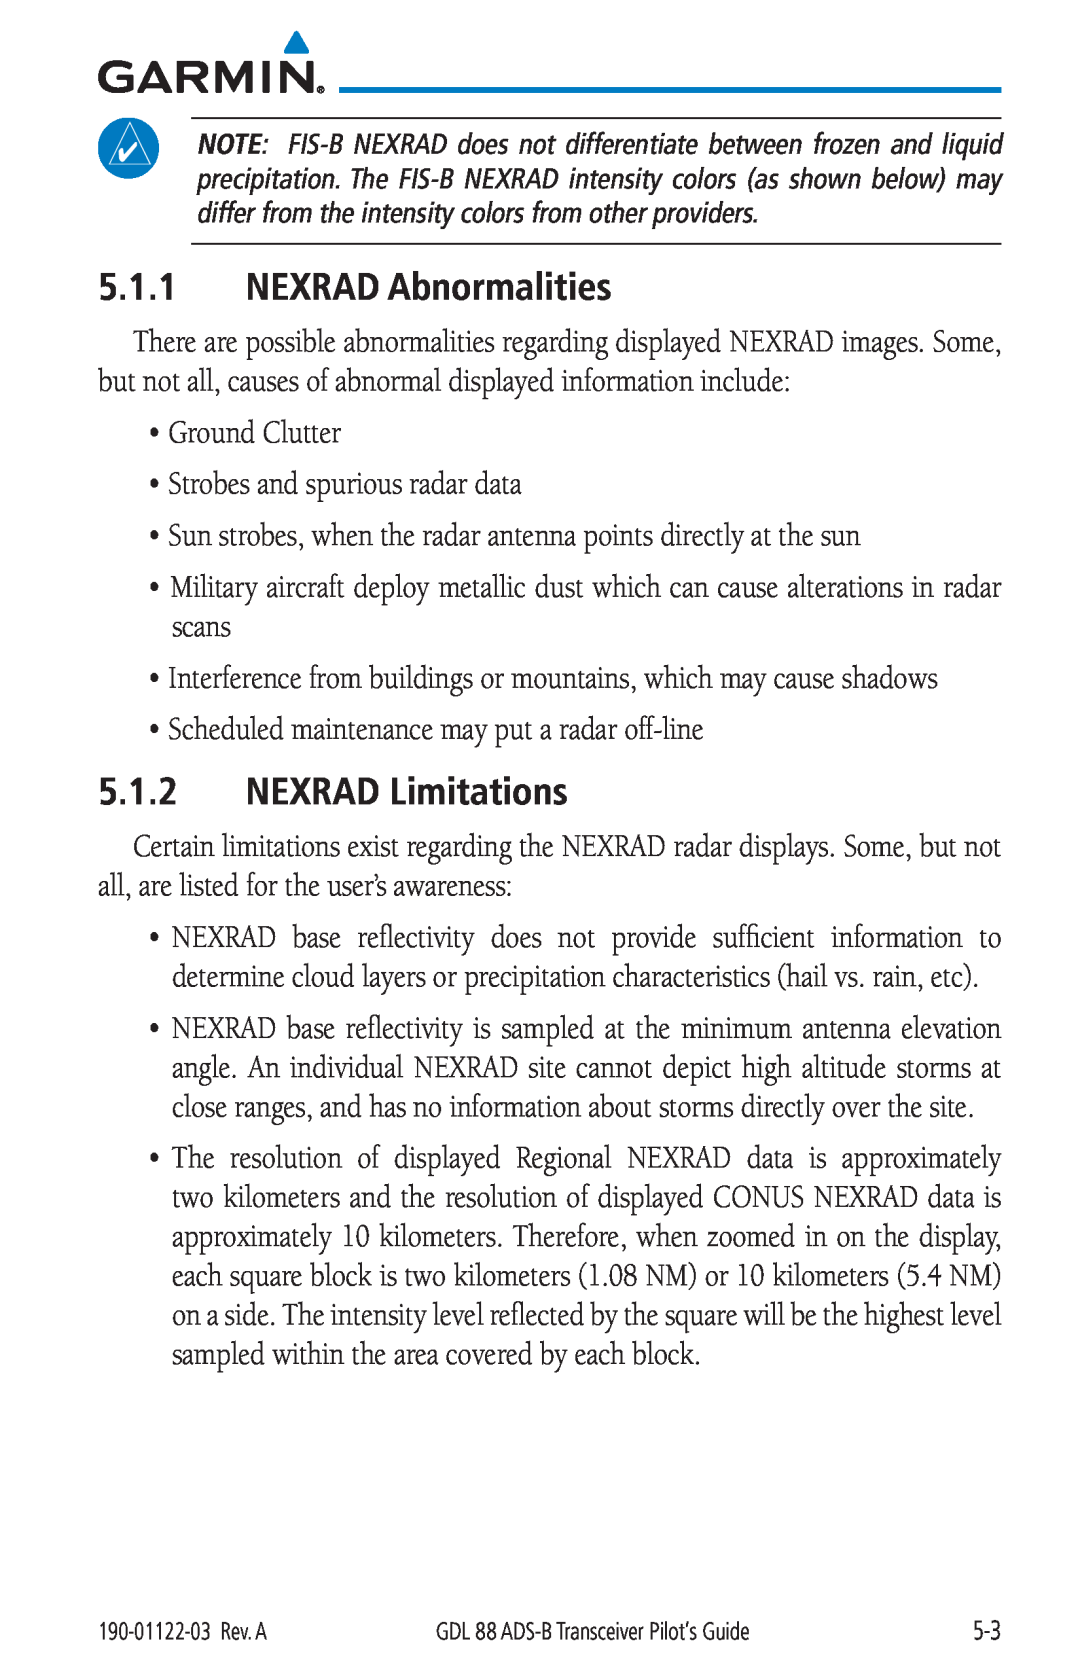 Garmin GDL 88 manual NEXRAD Abnormalities, NEXRAD Limitations, Ground Clutter Strobes and spurious radar data 